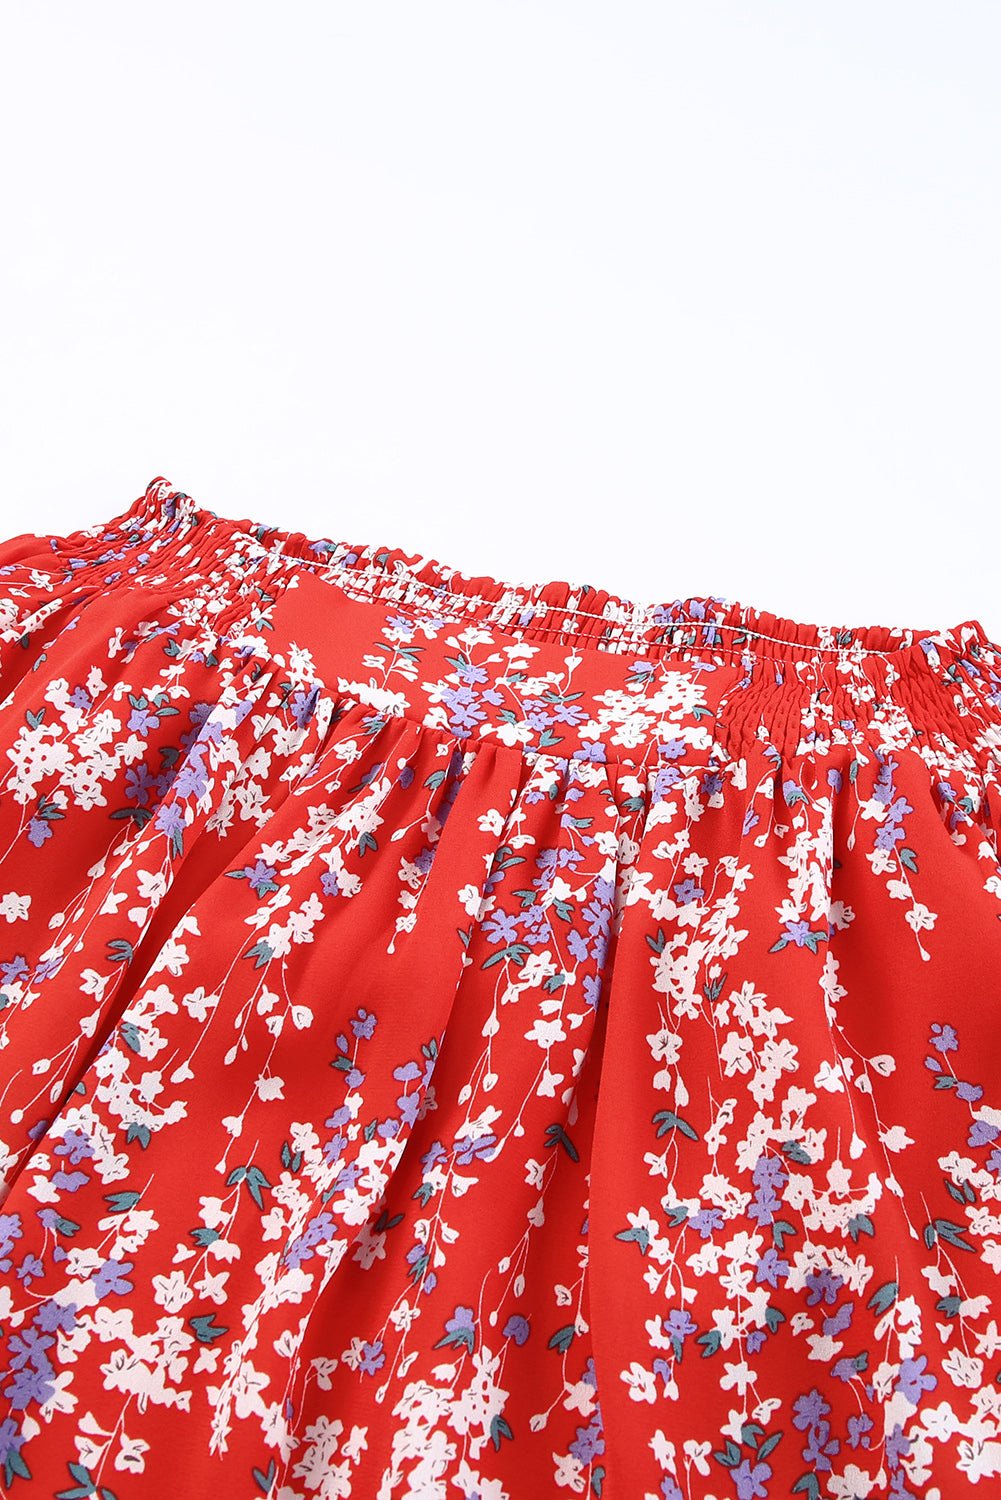 Fashionsarah.com Floral Ruffled Crop Top and Maxi Skirt Sets